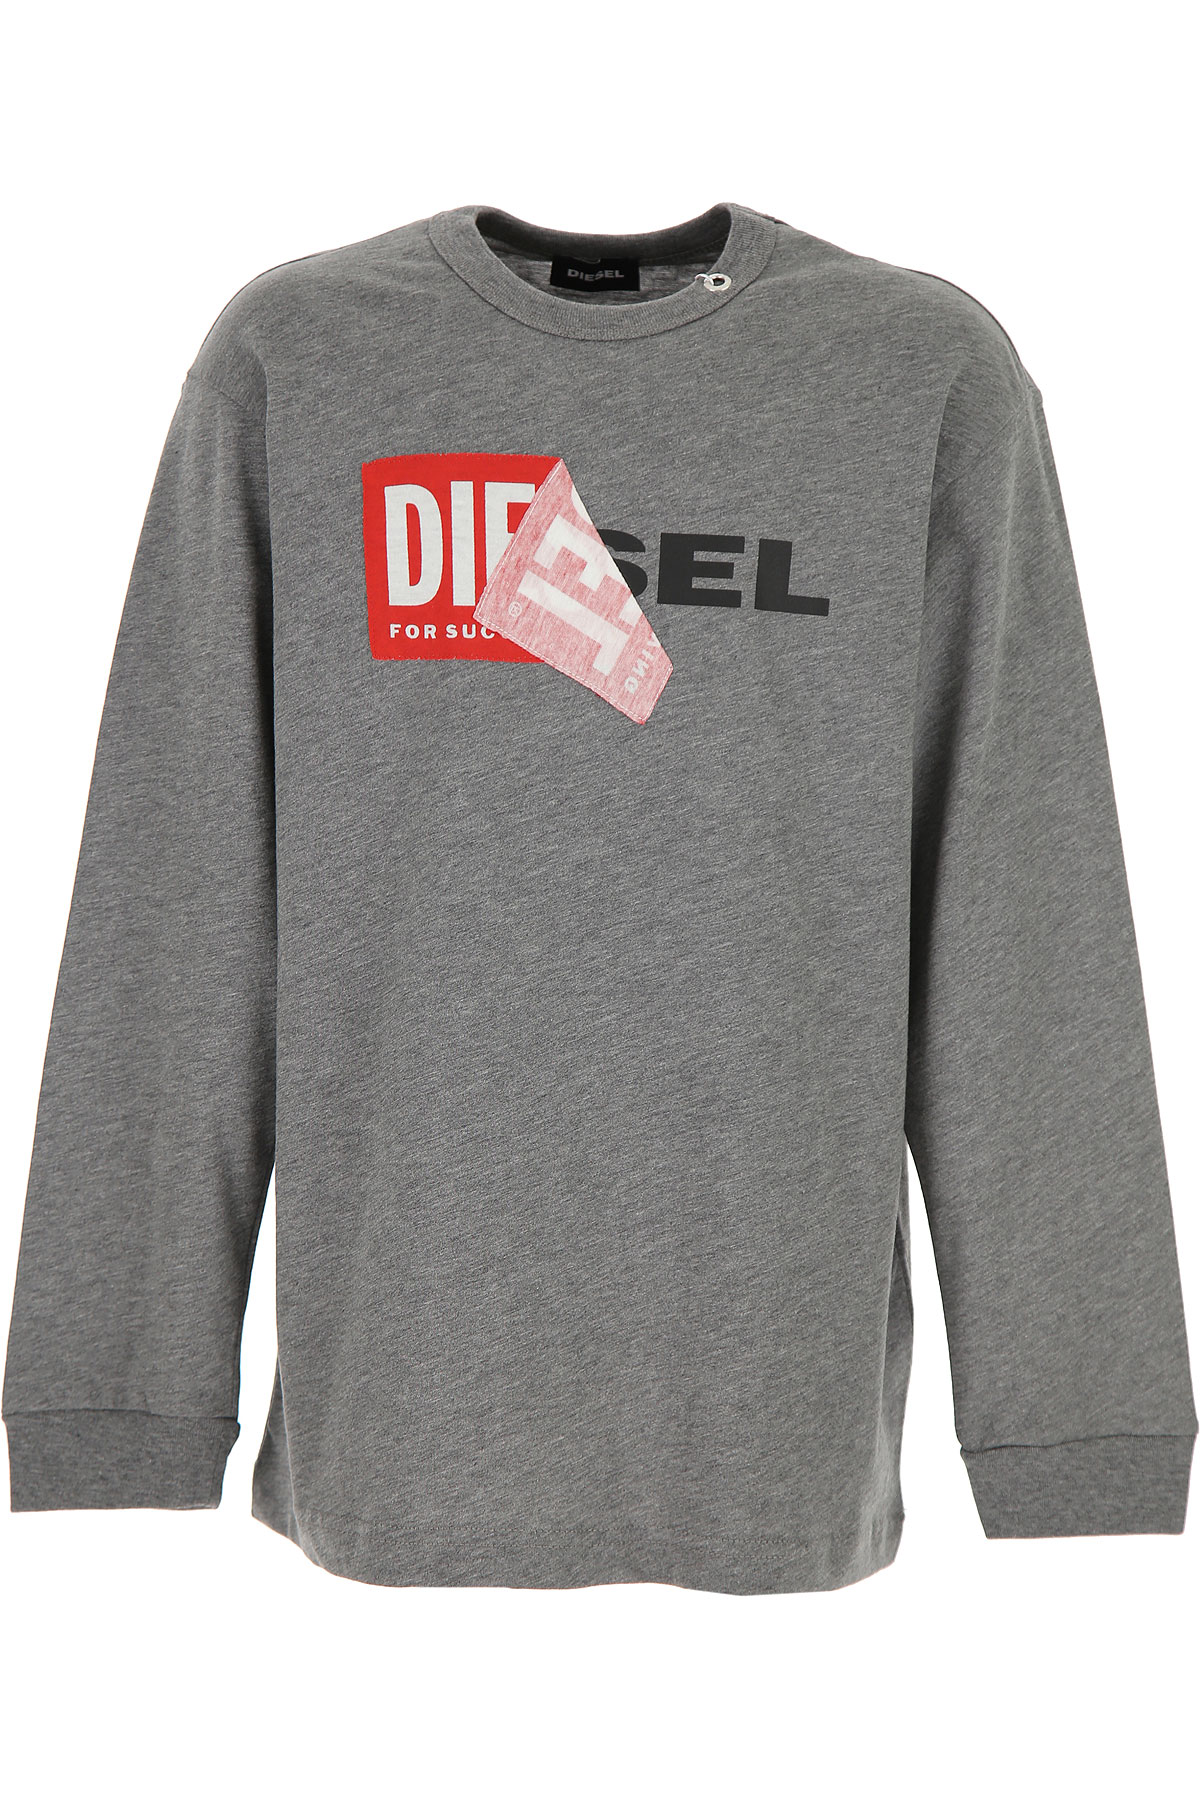 Diesel Kinder T-Shirt für Jungen Günstig im Sale, Grau, Baumwolle, 2017, 10Y 12Y 16Y 8Y